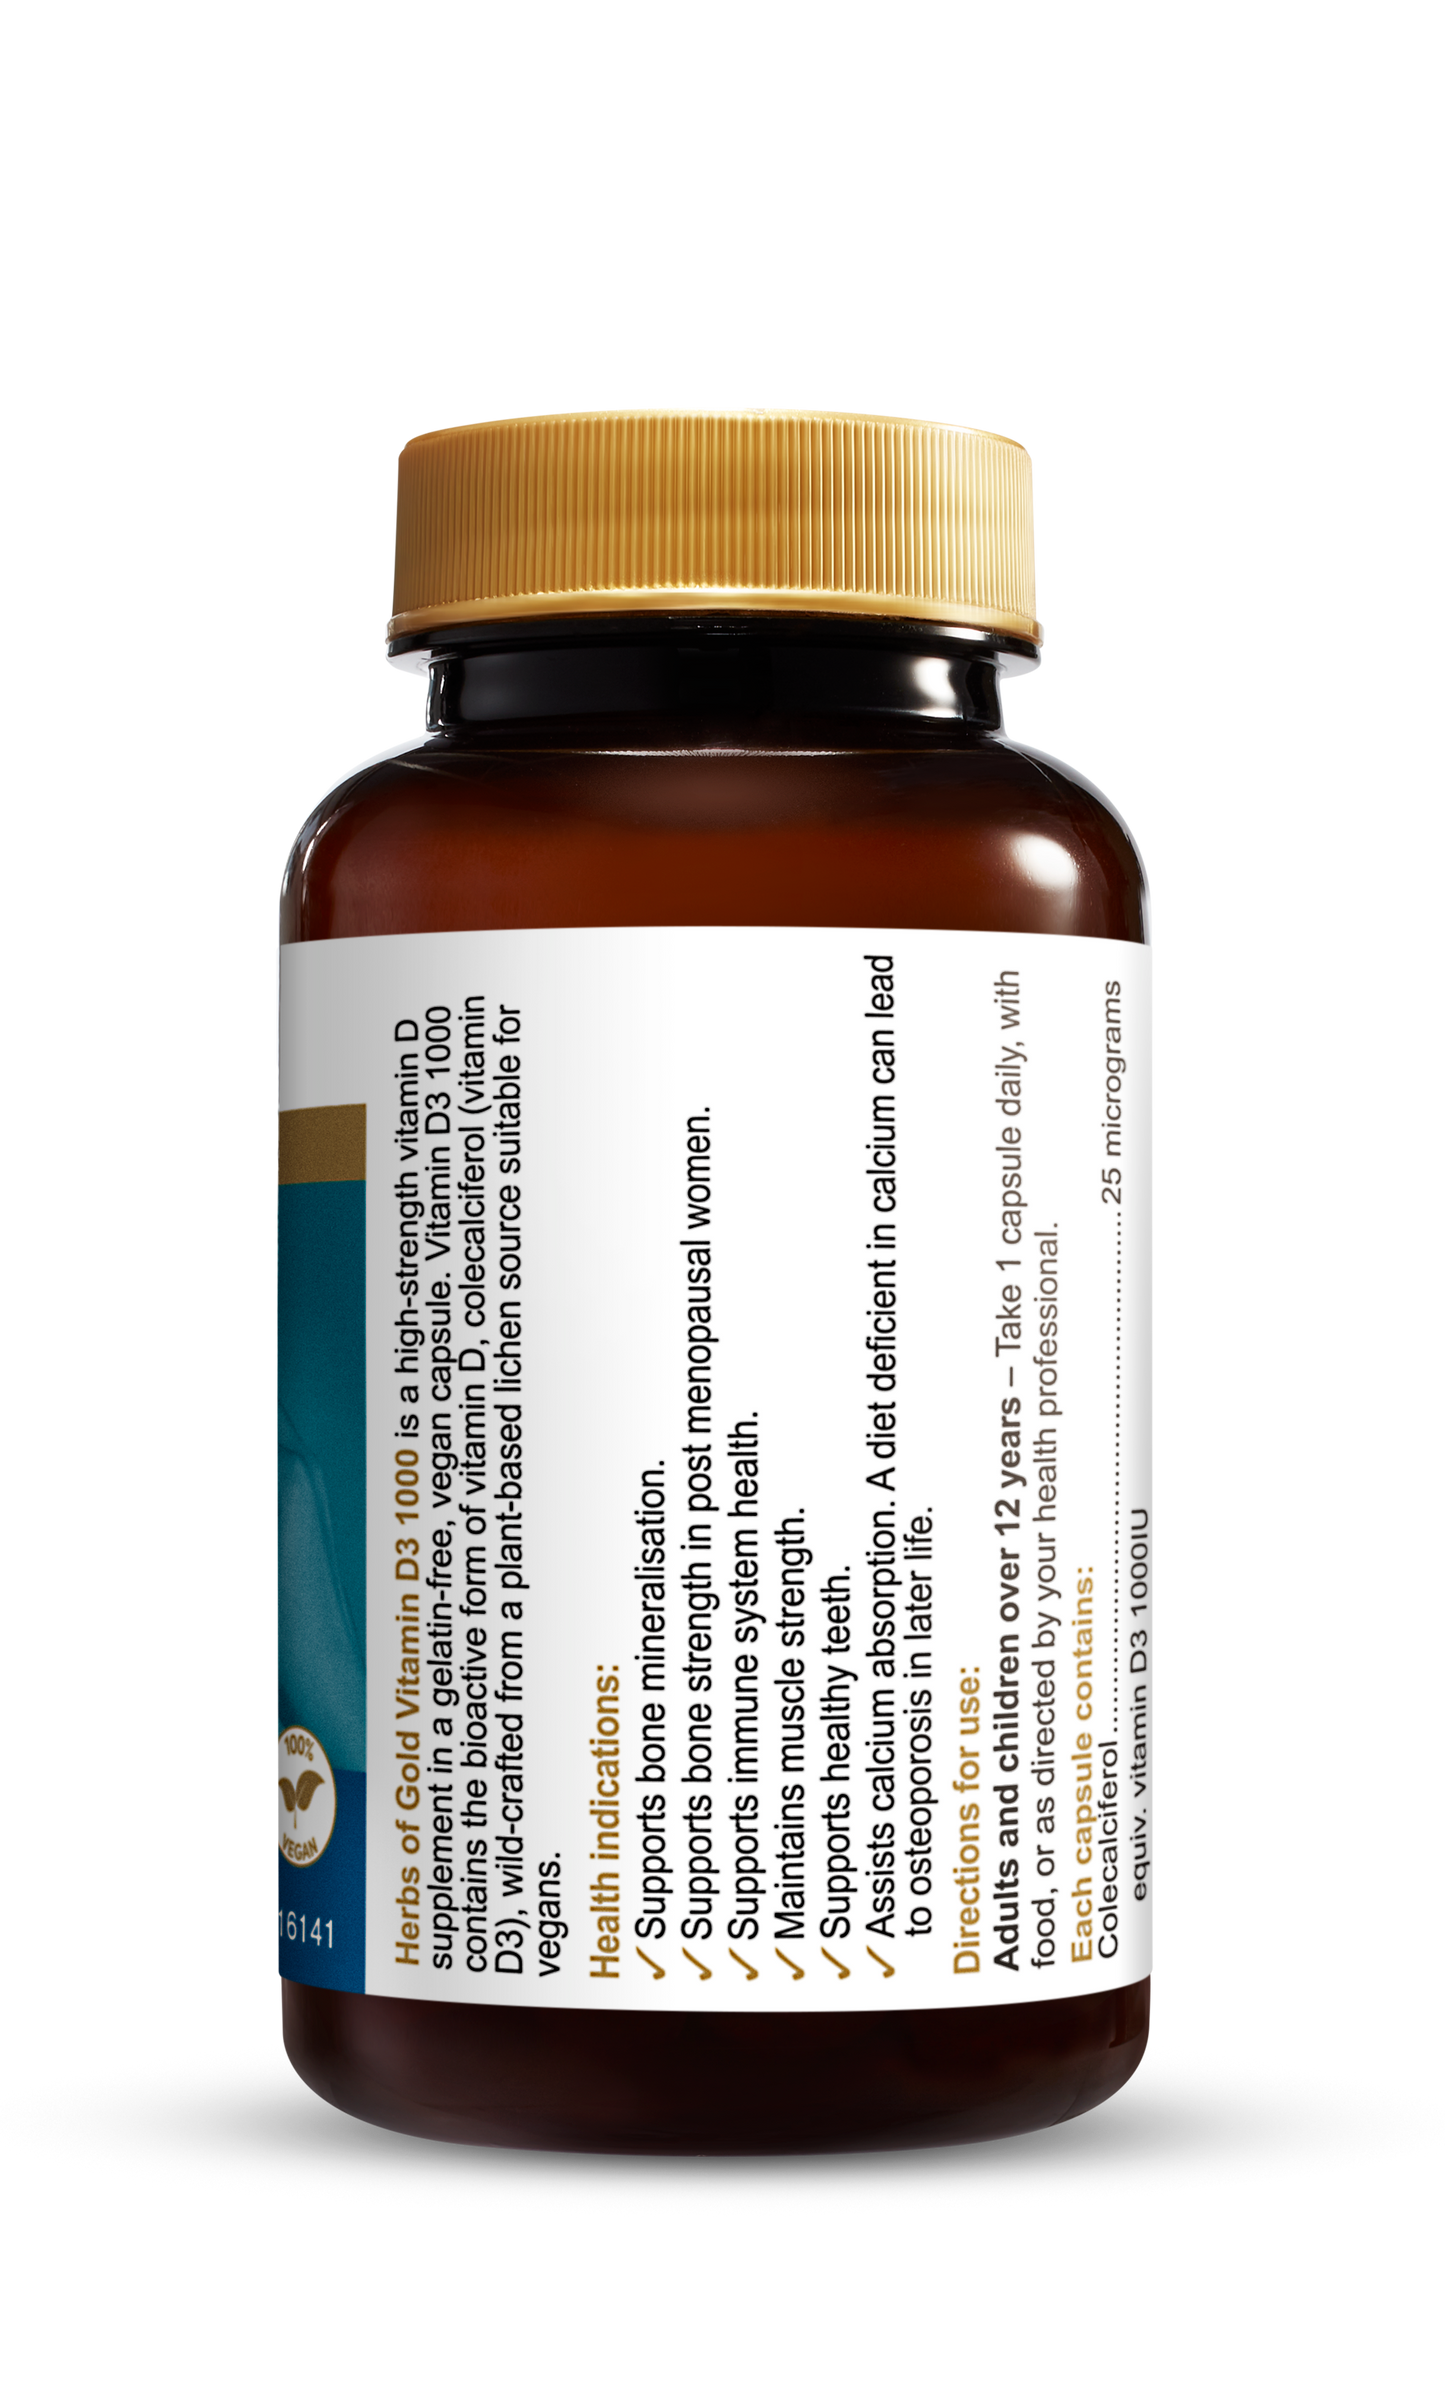 Herbs of Gold Vitamin D3 1000 120c